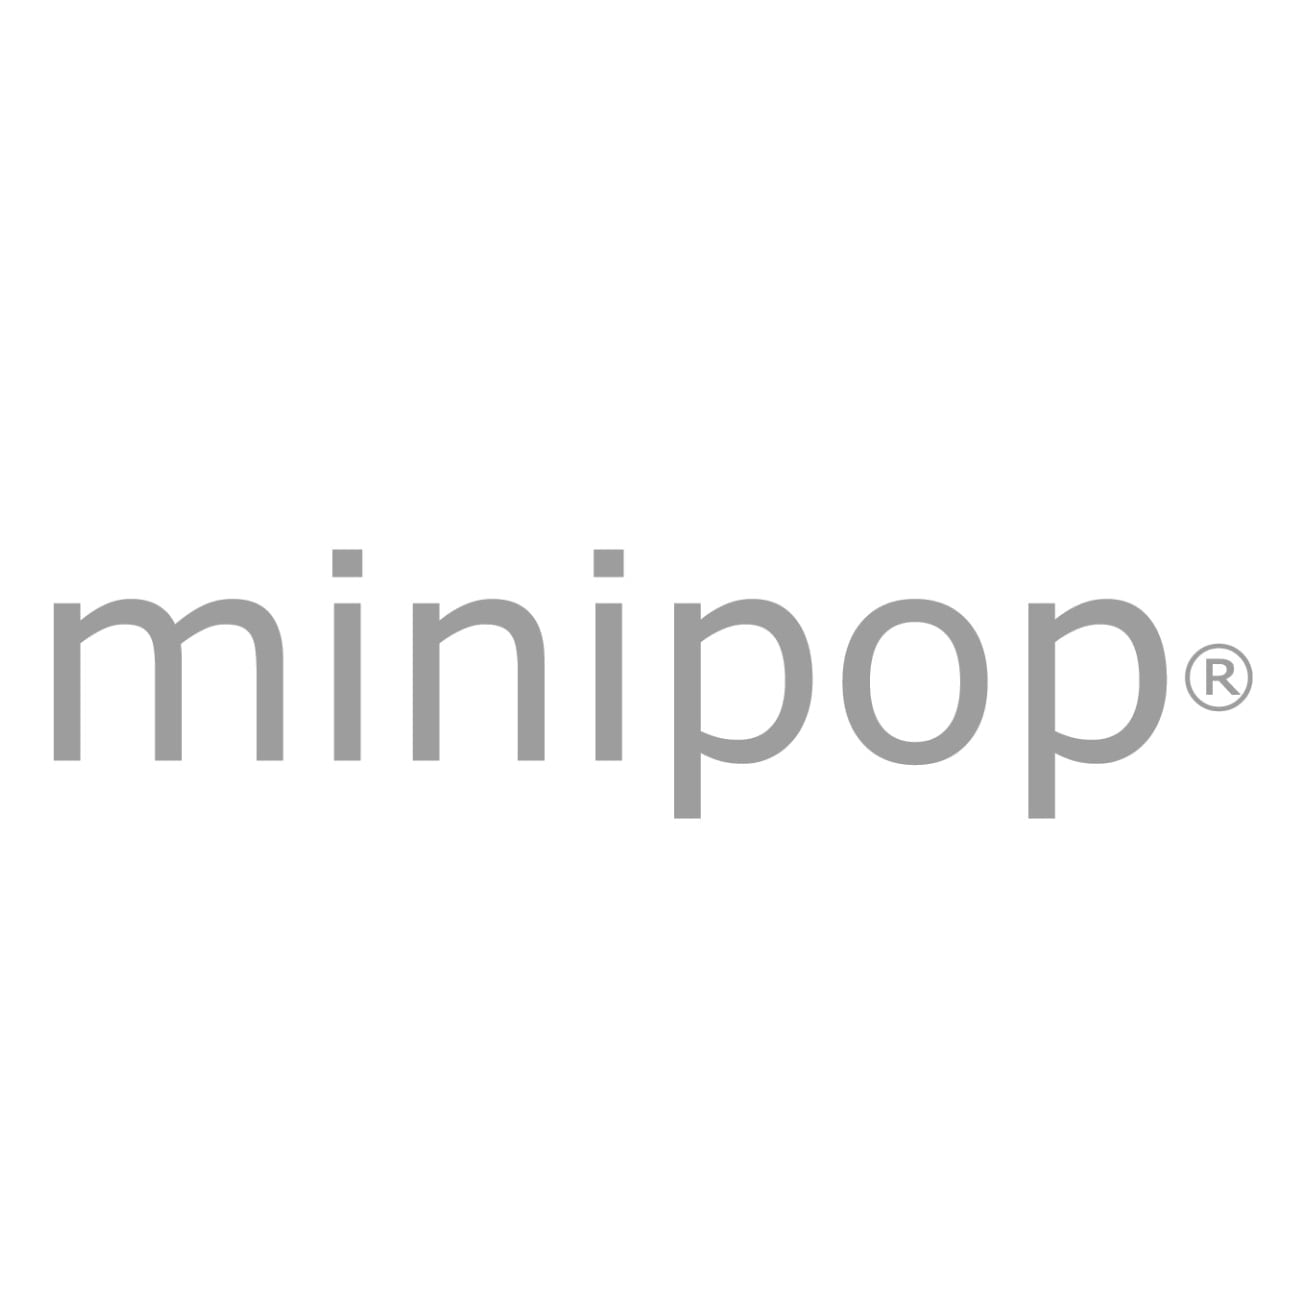 MiniPop